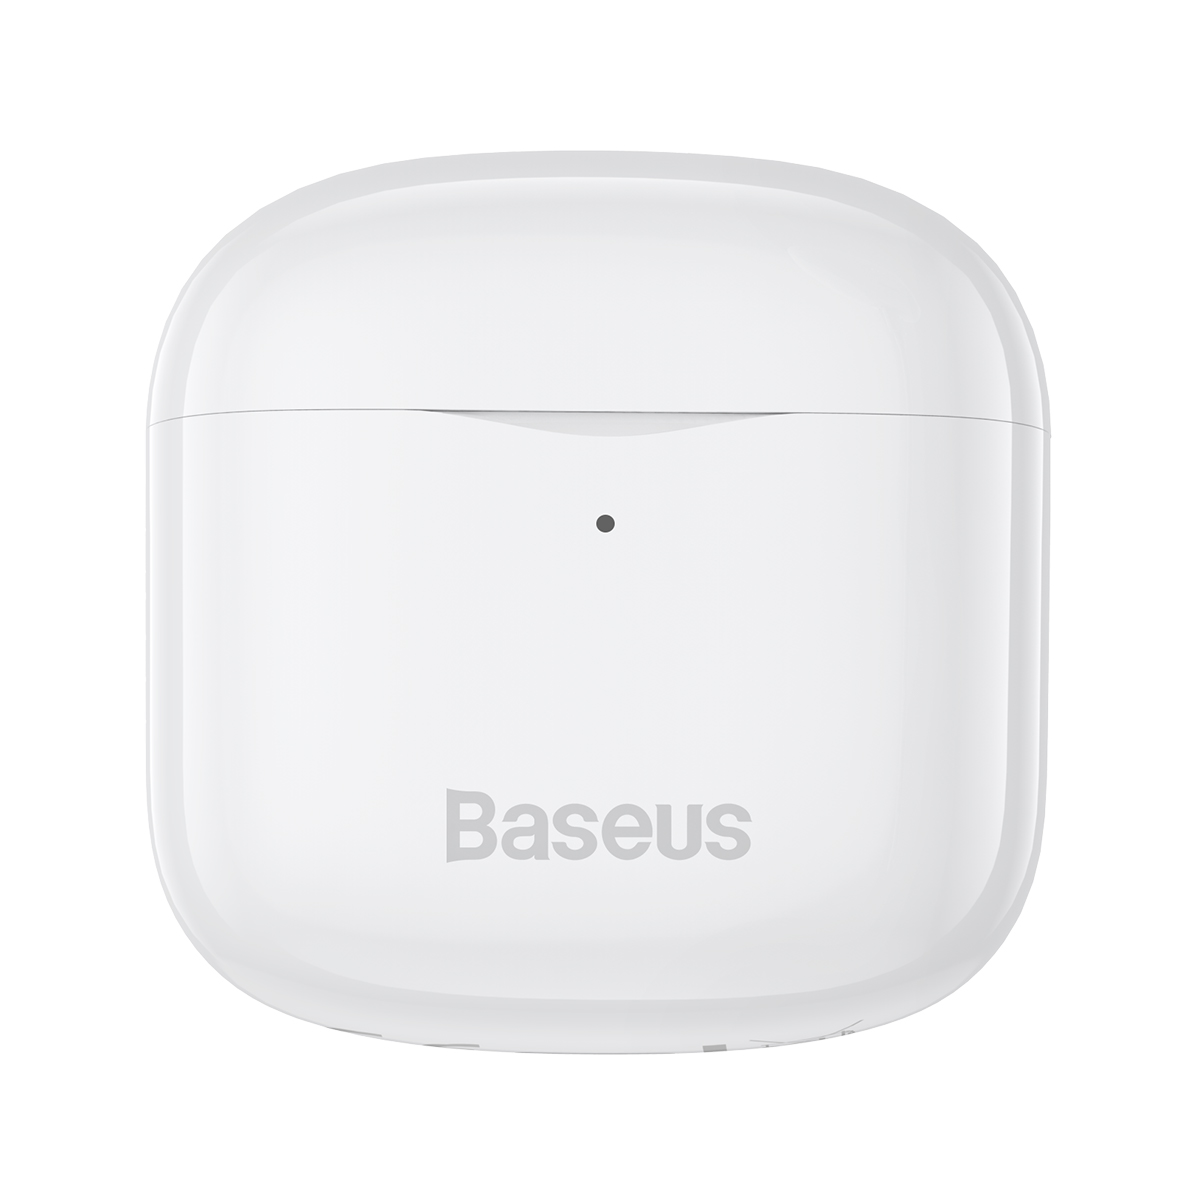 Baseus suchawki Bluetooth TWS Bowie E3 white